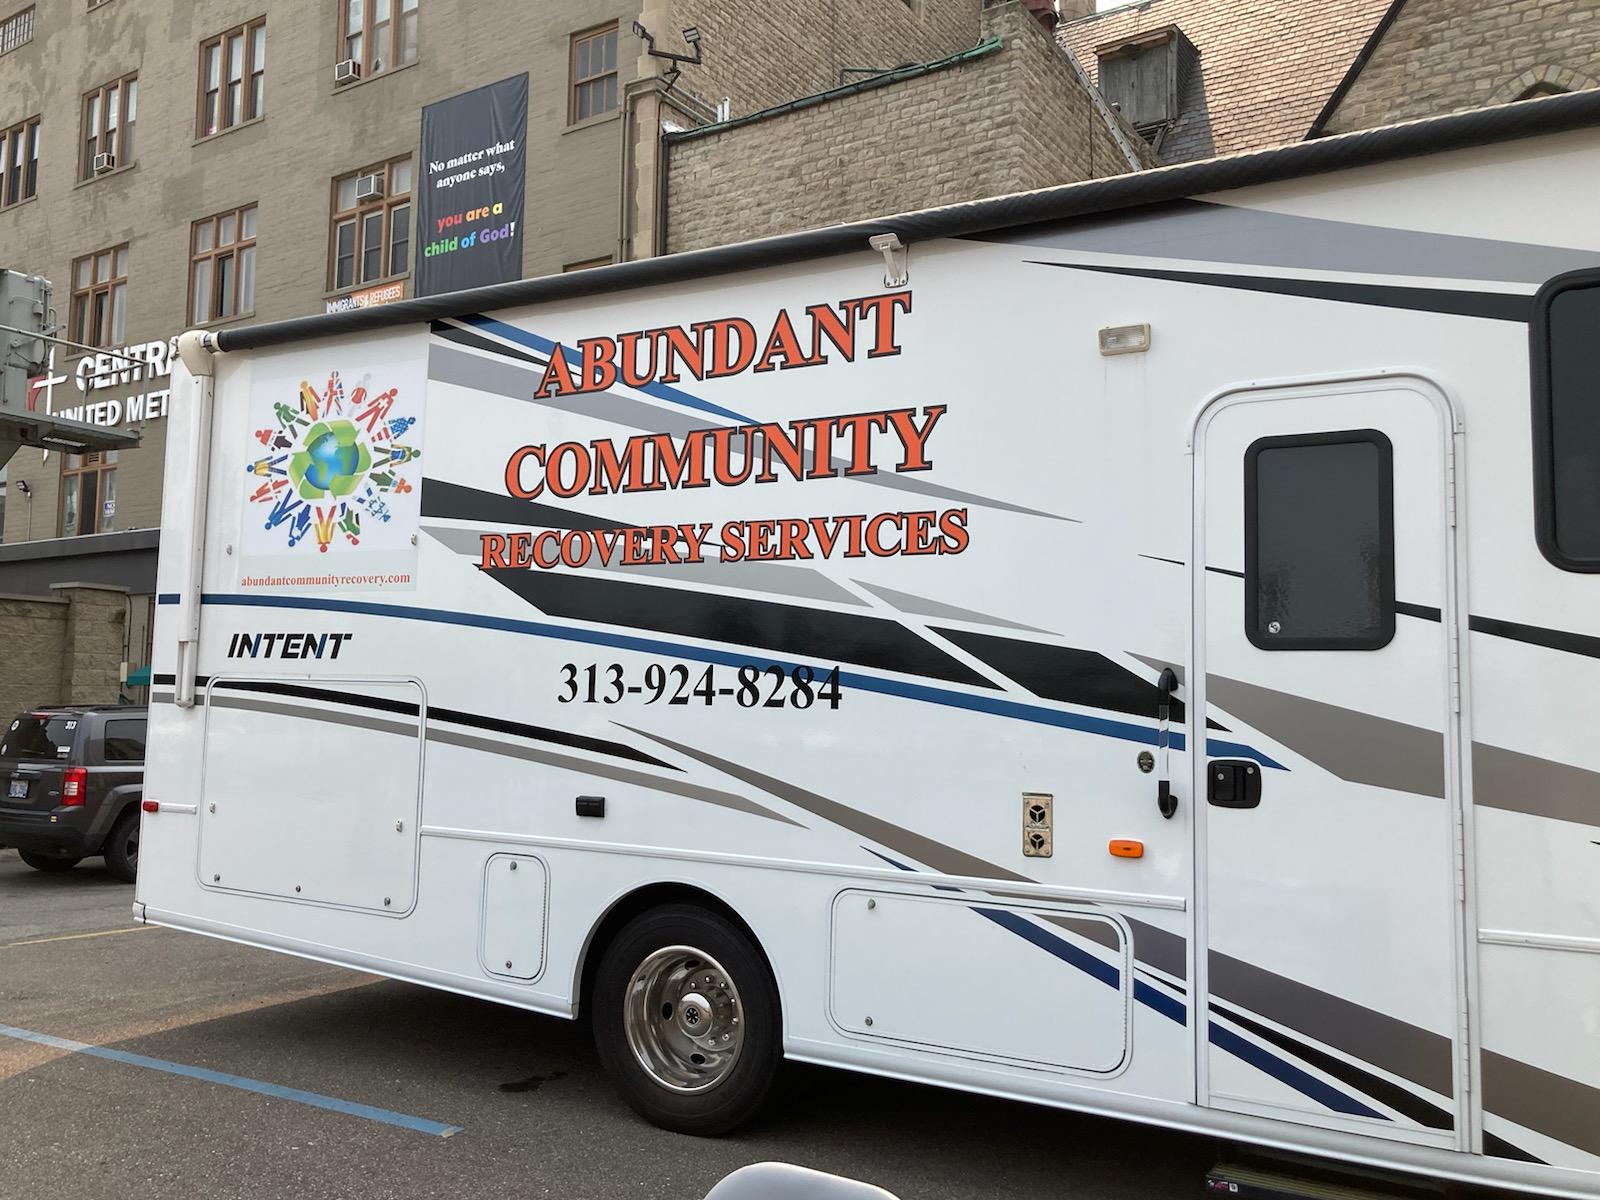 Abundant Community Recovery Services